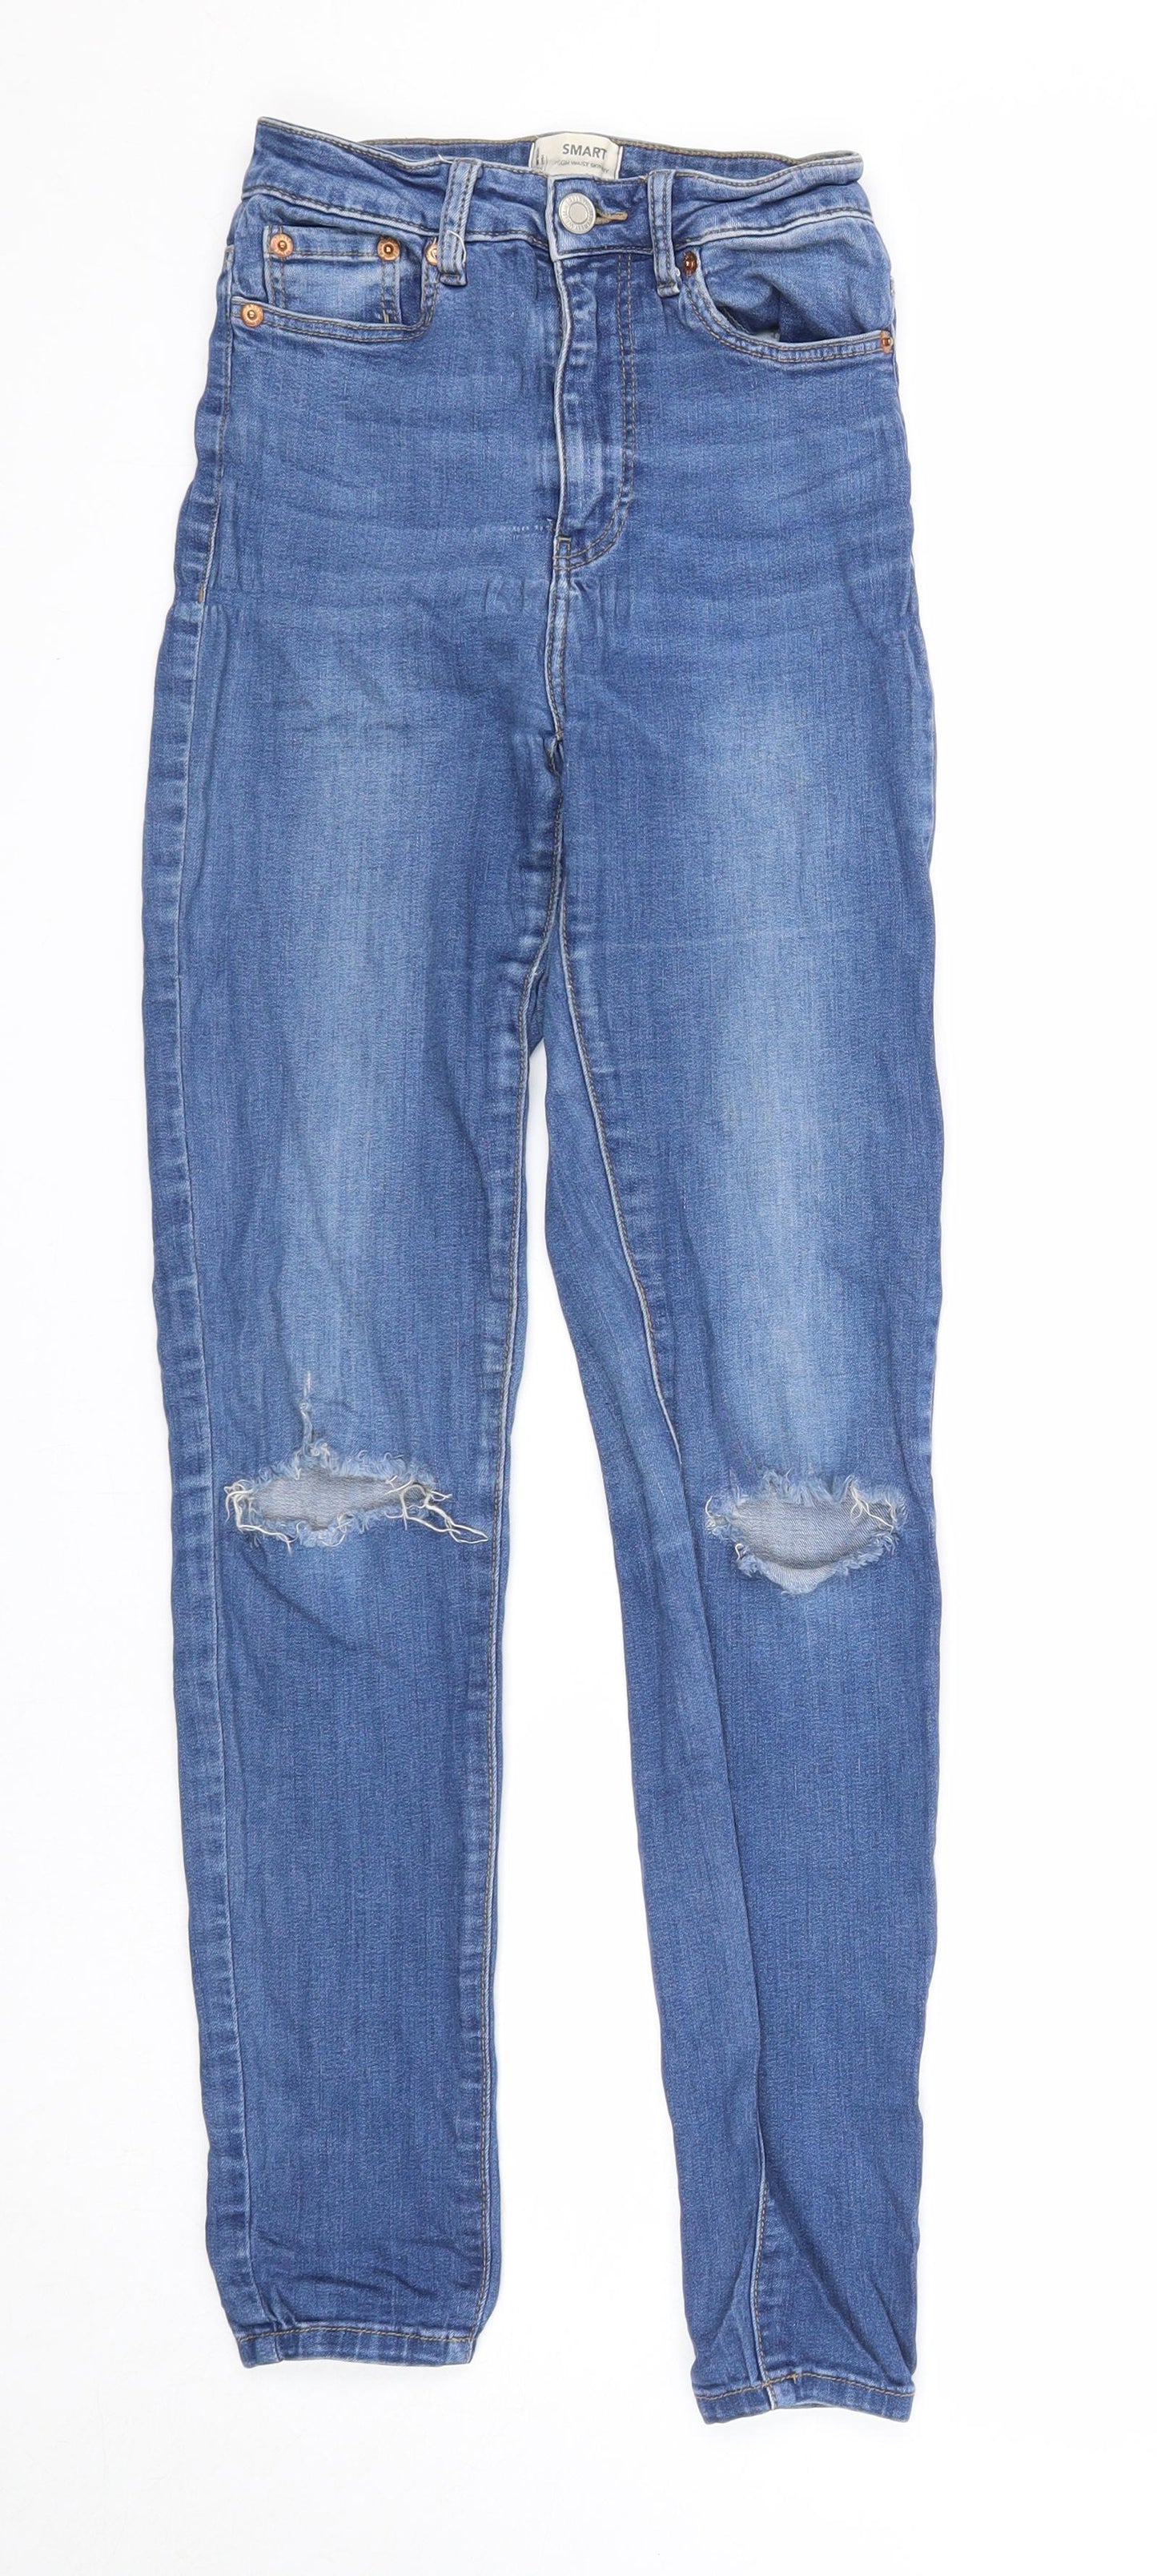 TALLY WEiJL Womens Blue Cotton Skinny Jeans Size 4 Regular Zip - Waist 22 inches